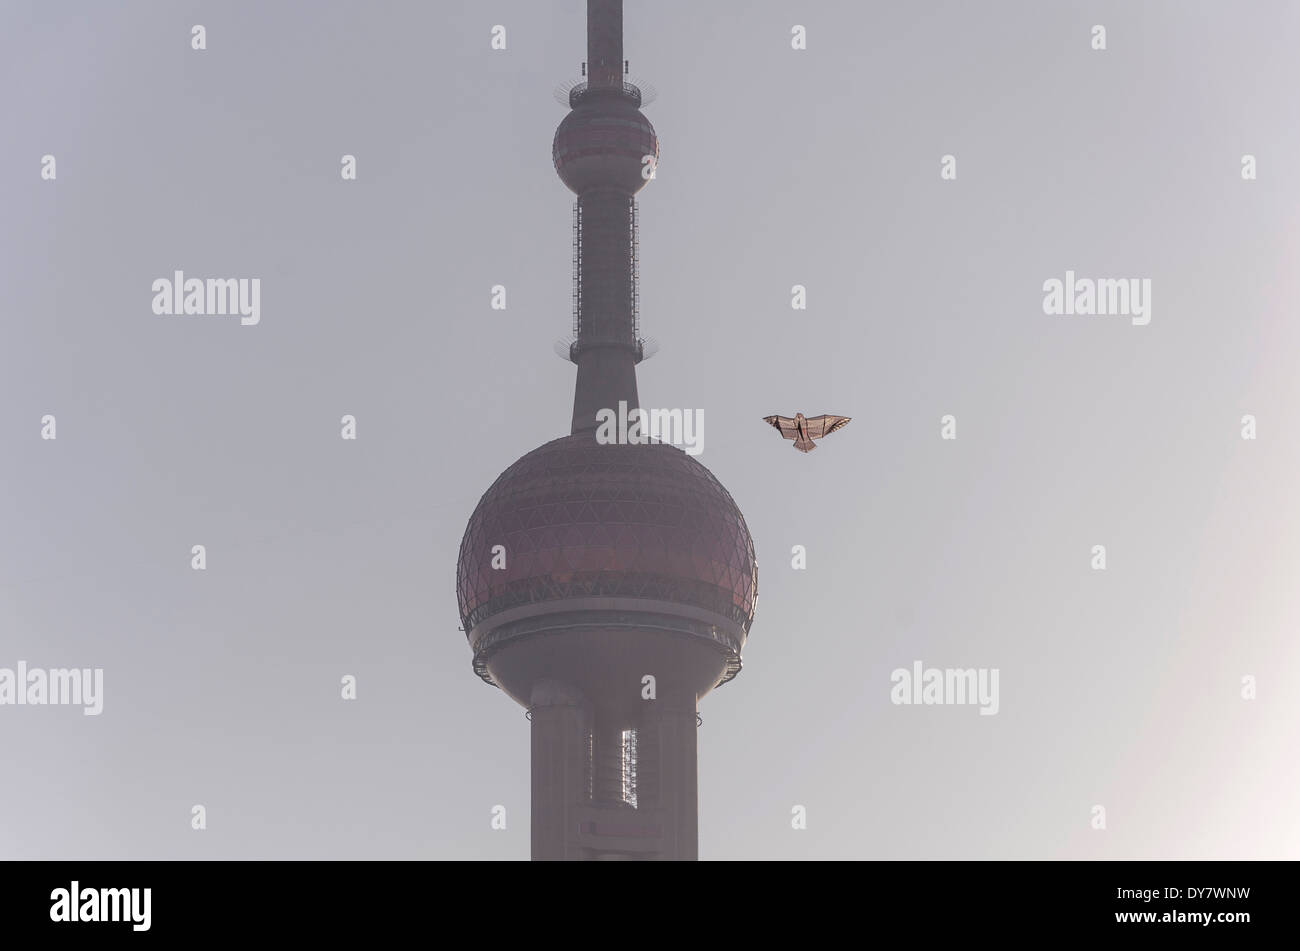 Oriental Pearl Tower and kite, Shanghai, China Stock Photo